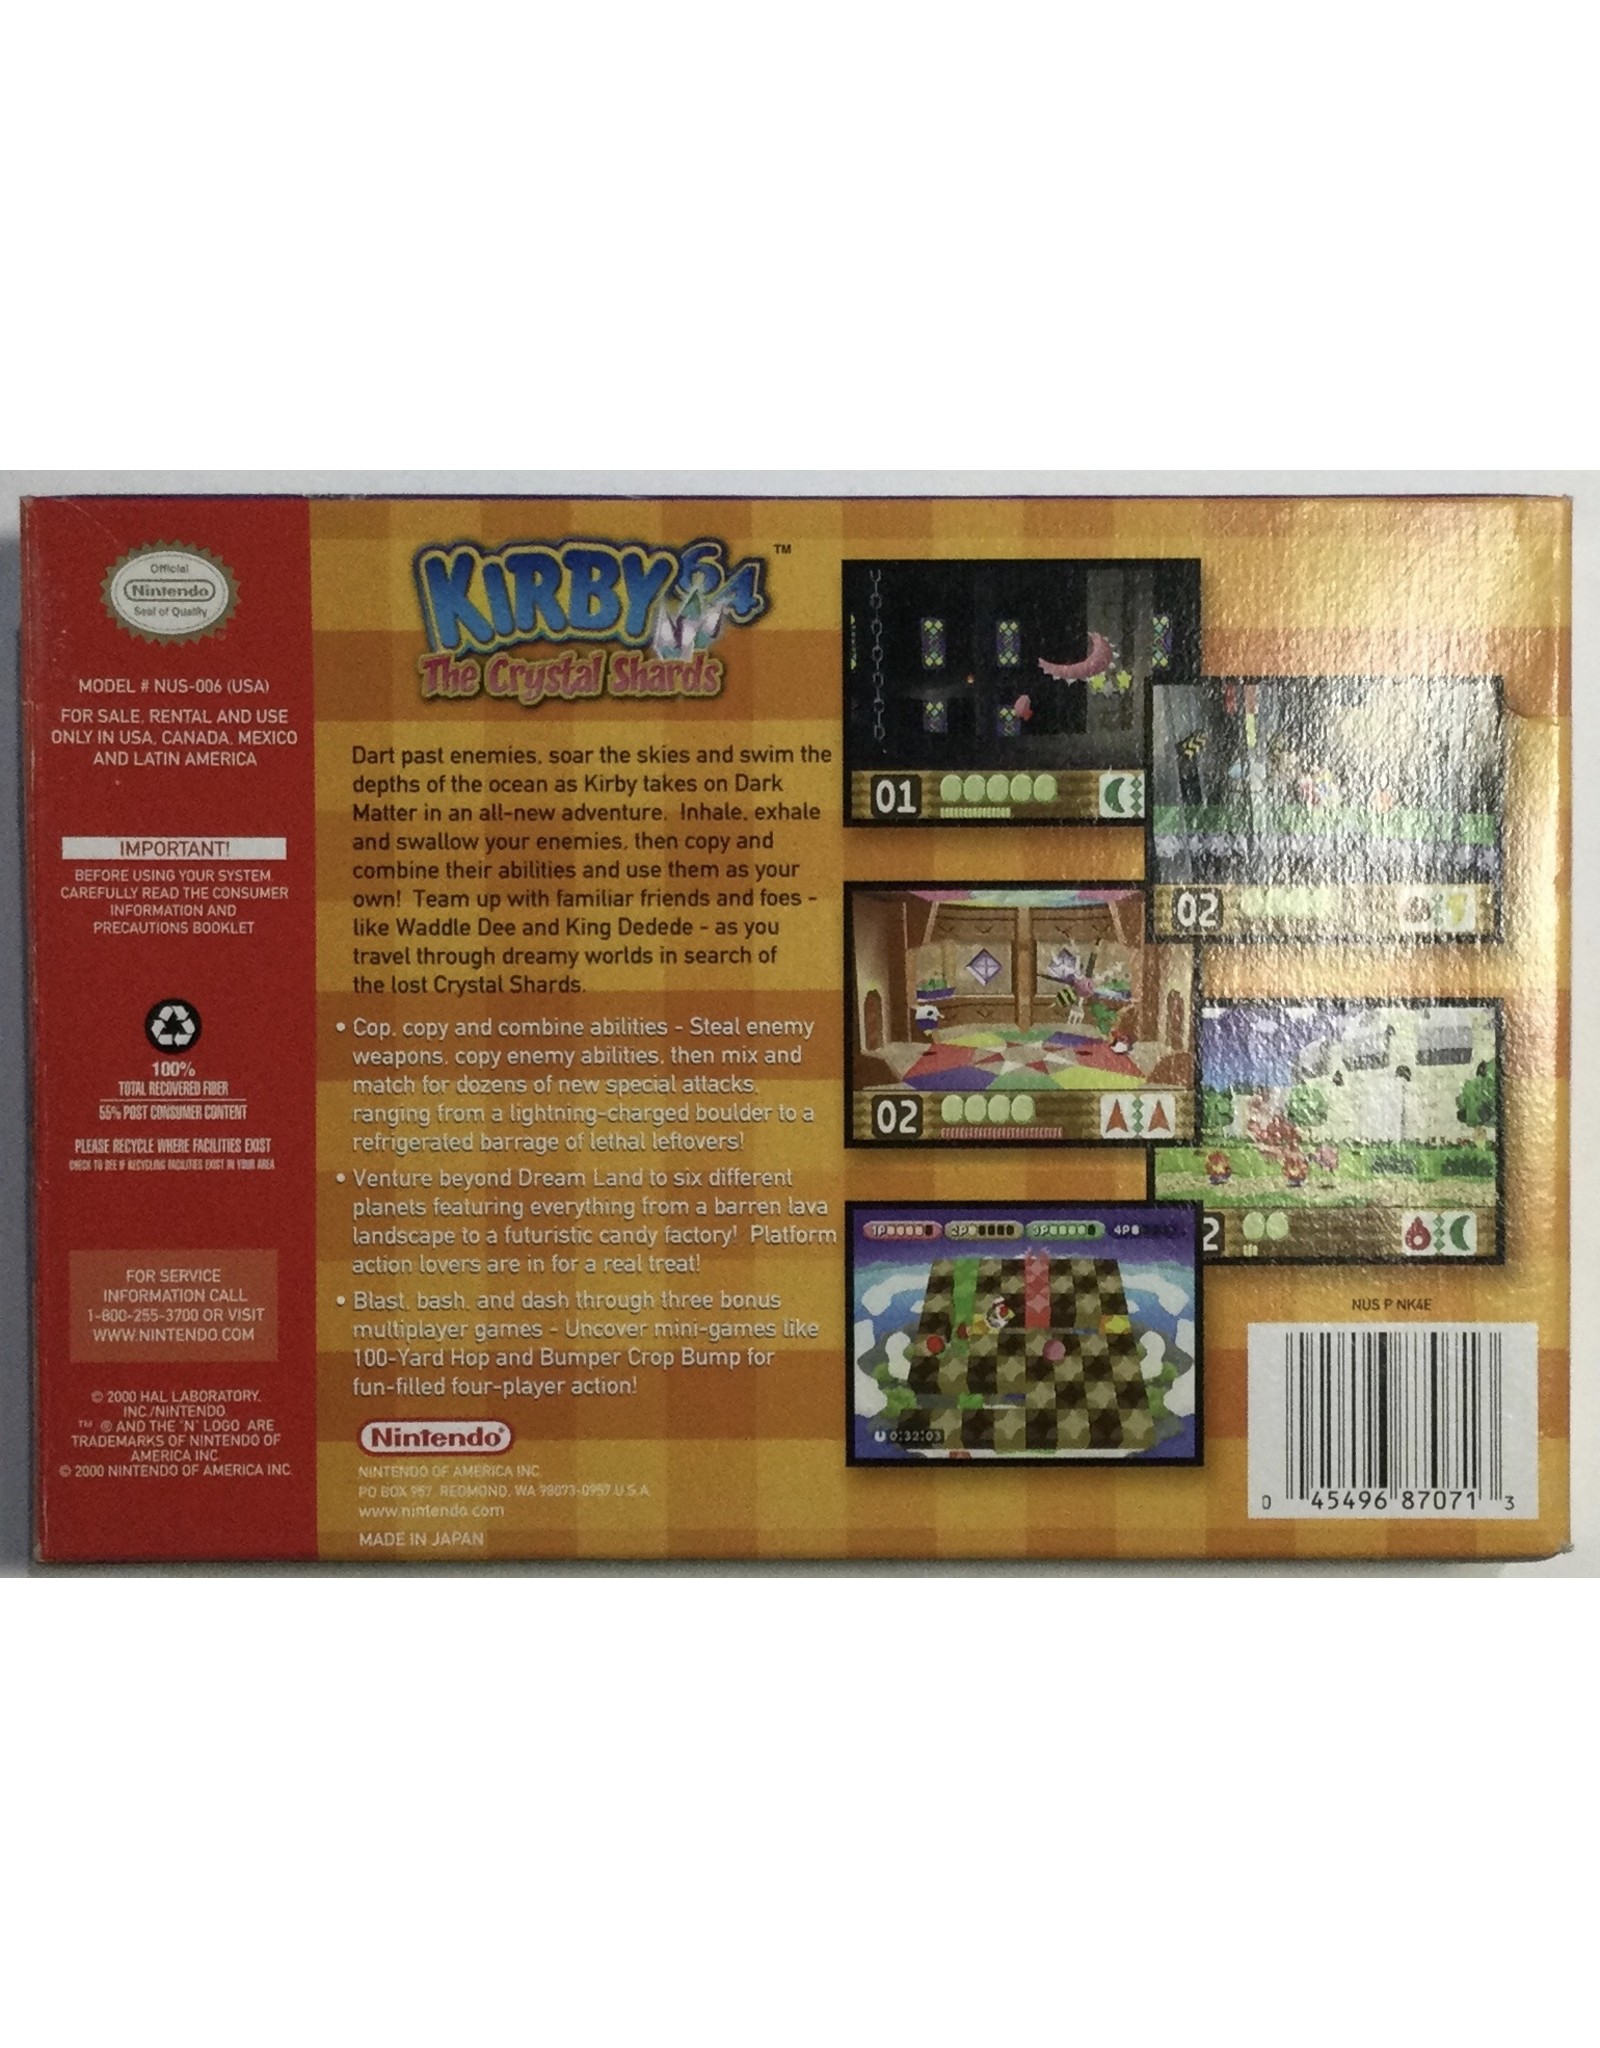 Nintendo Kirby 64 The Crystal Shards for Nintendo 64 (N64) - CIB